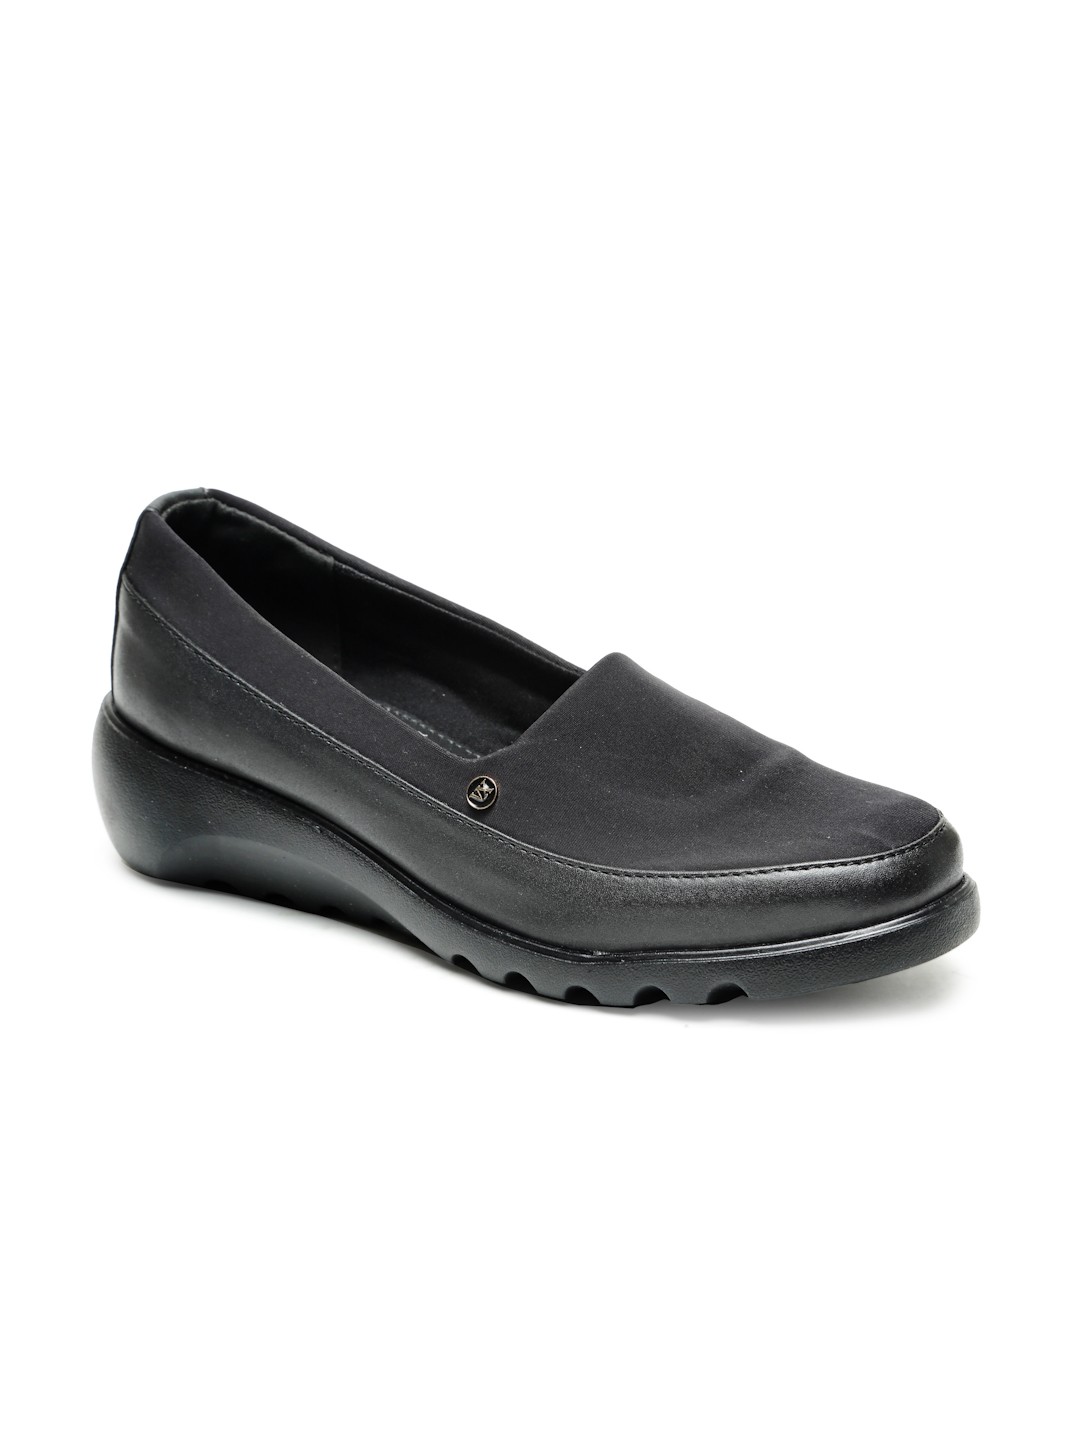 Buy Von Wellx Germany Comfort Women's Black Casual Shoes Elsa Online in Maharashtra